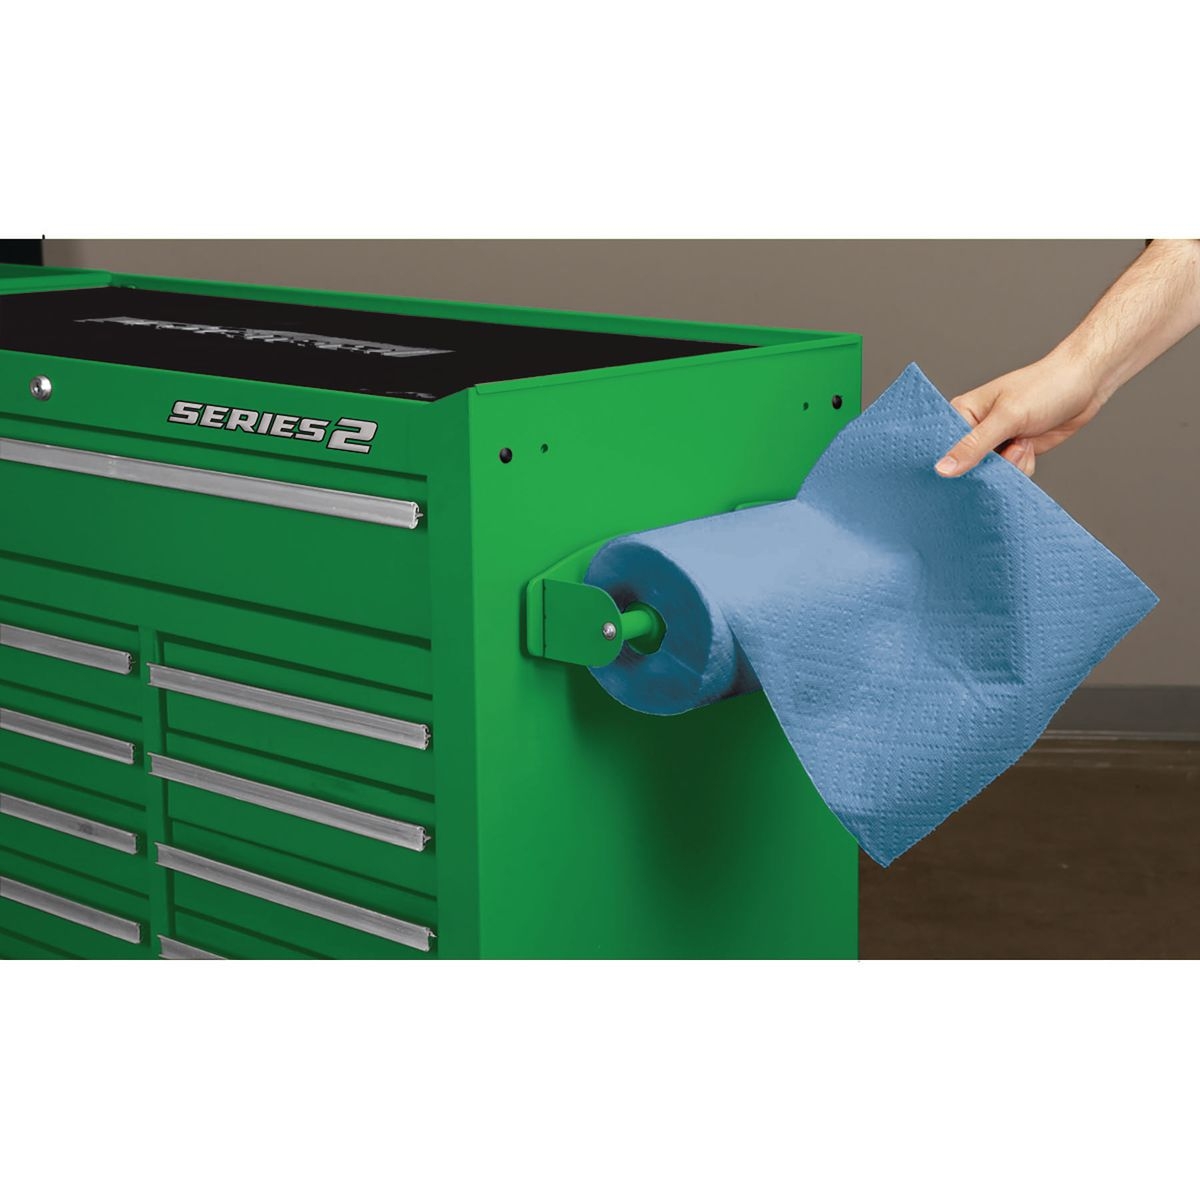 U.S. GENERAL Magnetic Paper Towel Holder - Green - Item 56455